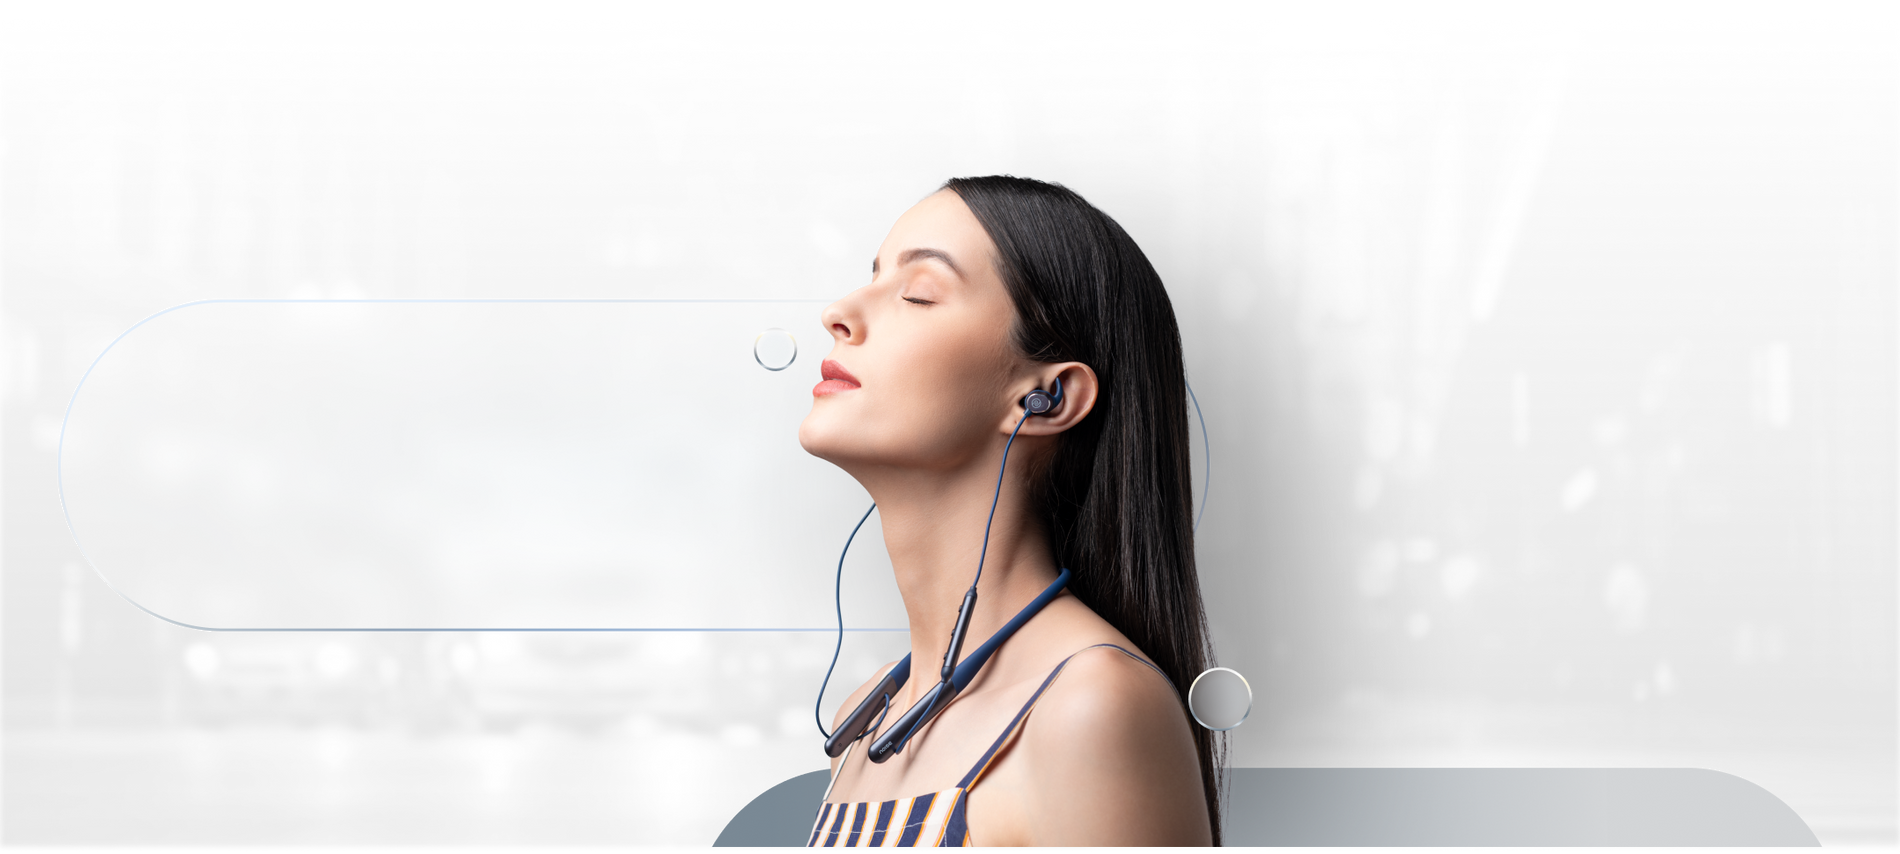 Noise Flair XL Bluetooth Wireless Neckband